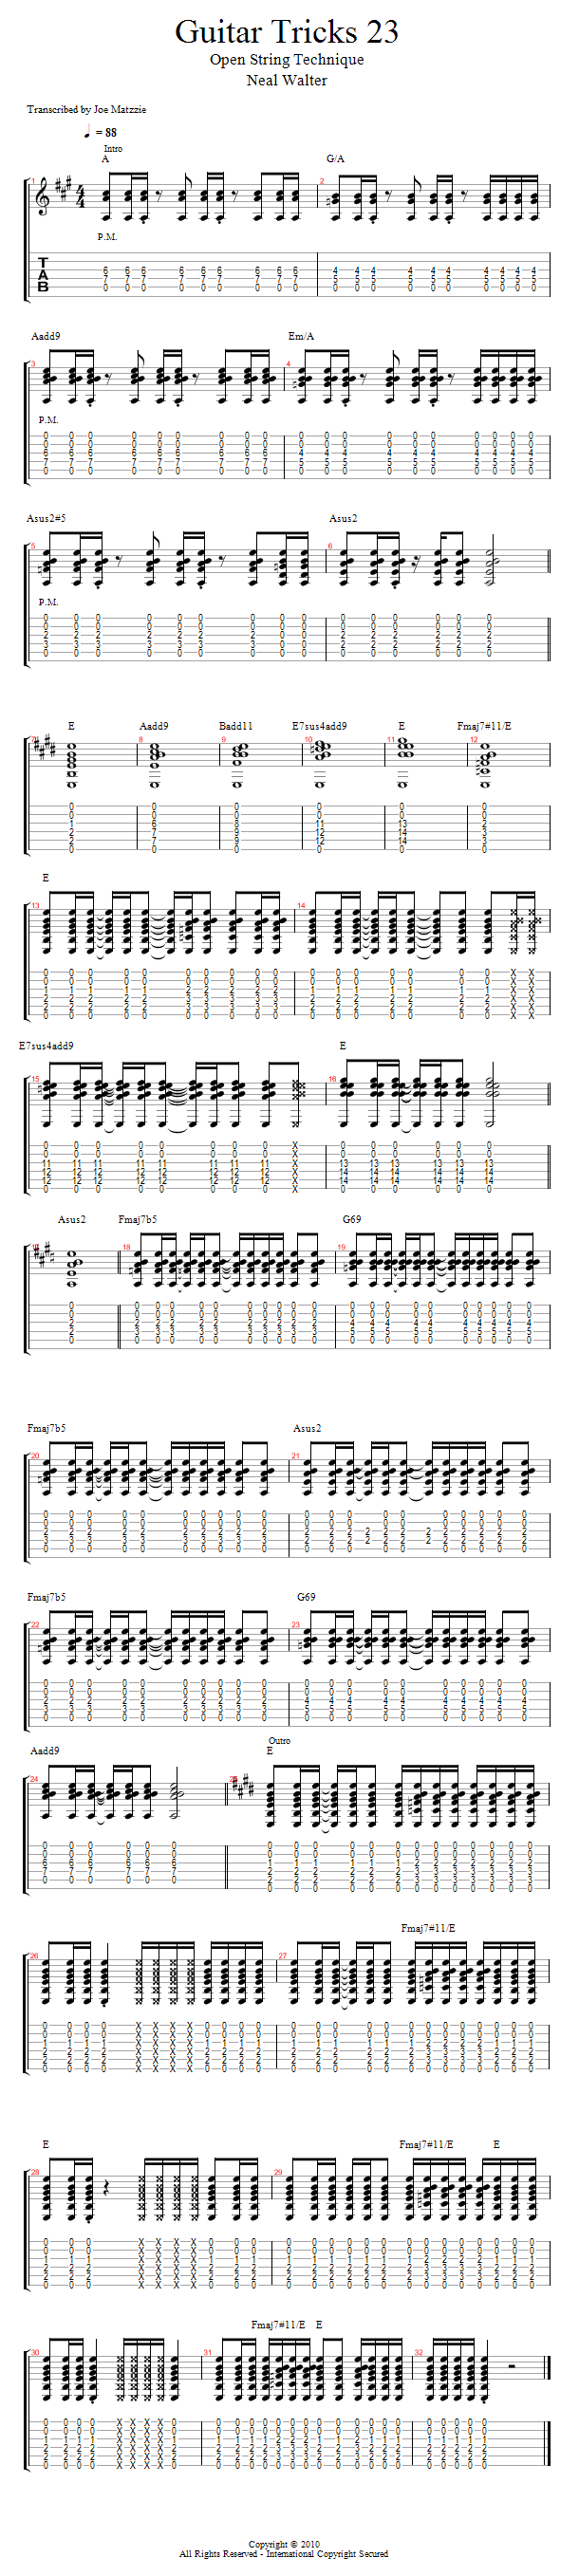 Guitar Tricks 23: Open String Technique song notation